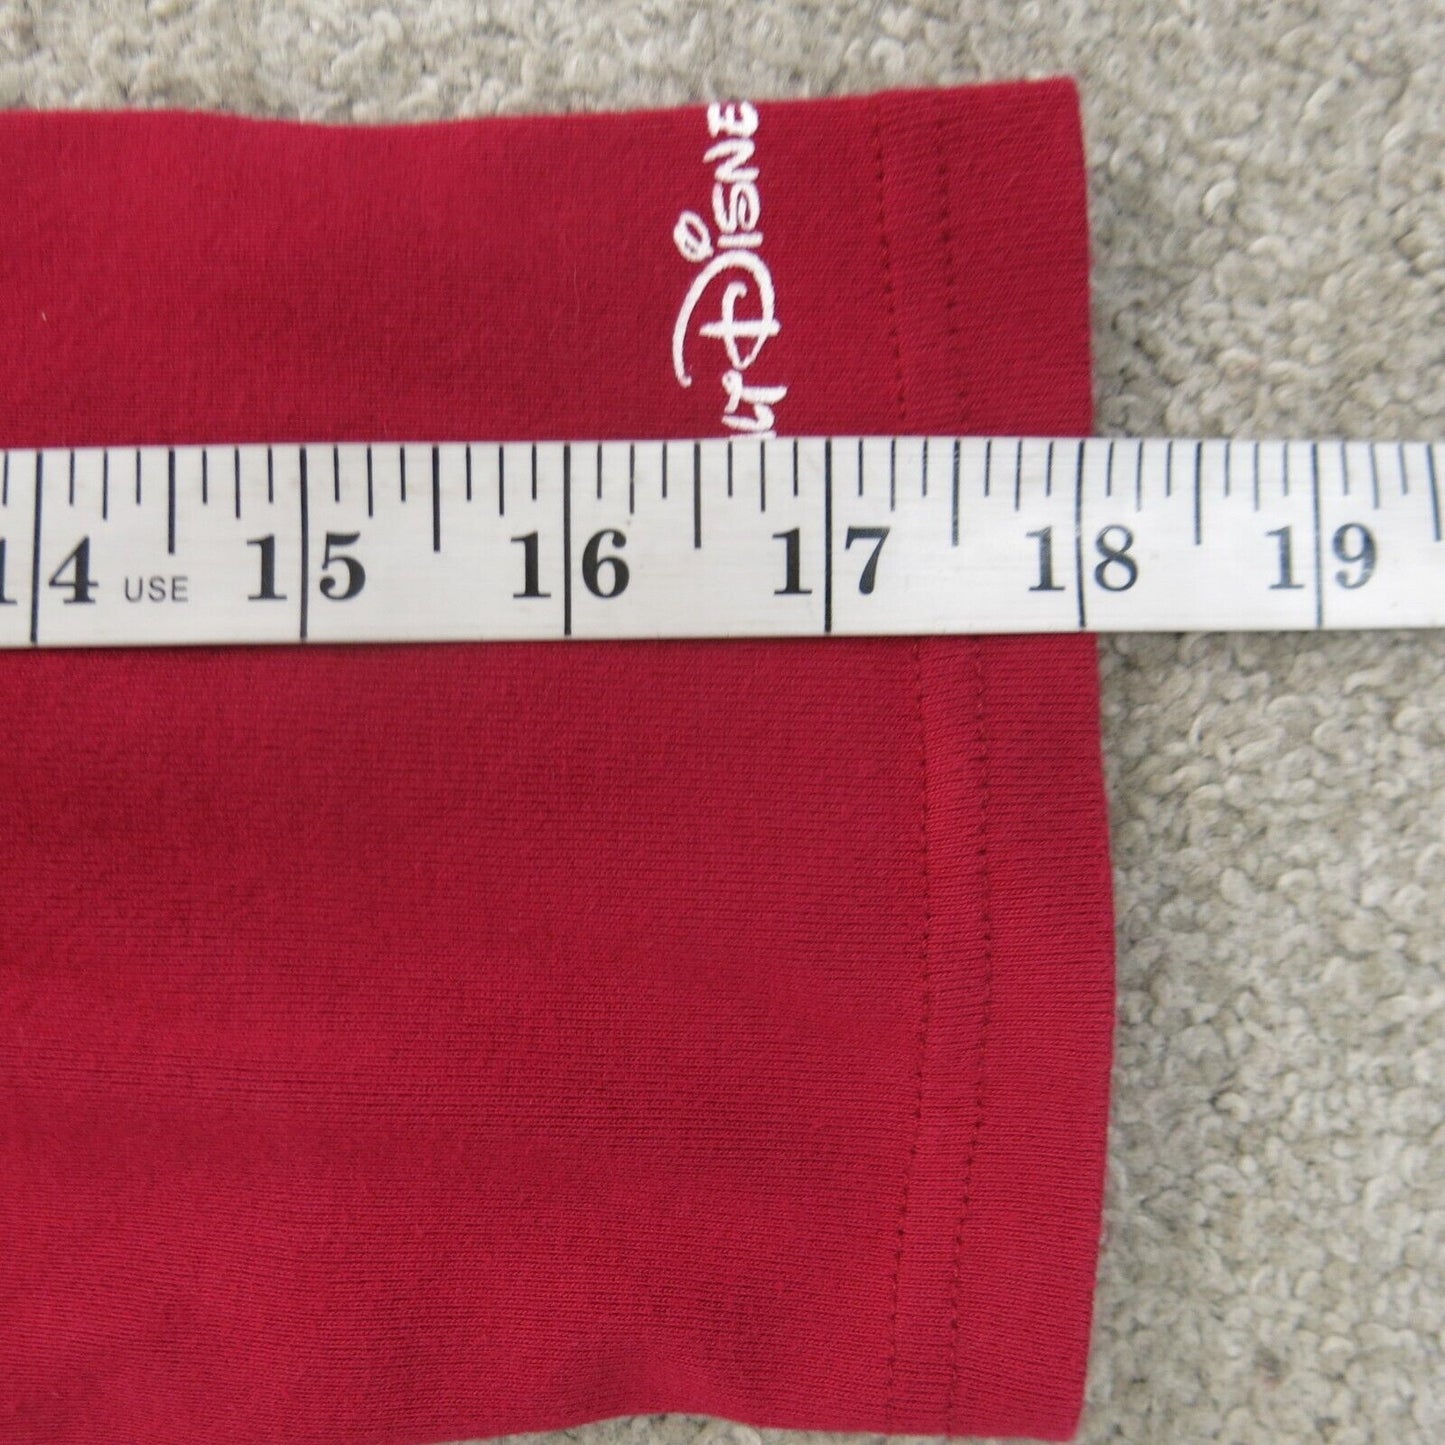 Disney Shirt Womens Large Red Long Sleeve 100% Cotton Lightweight Top Crew Neck